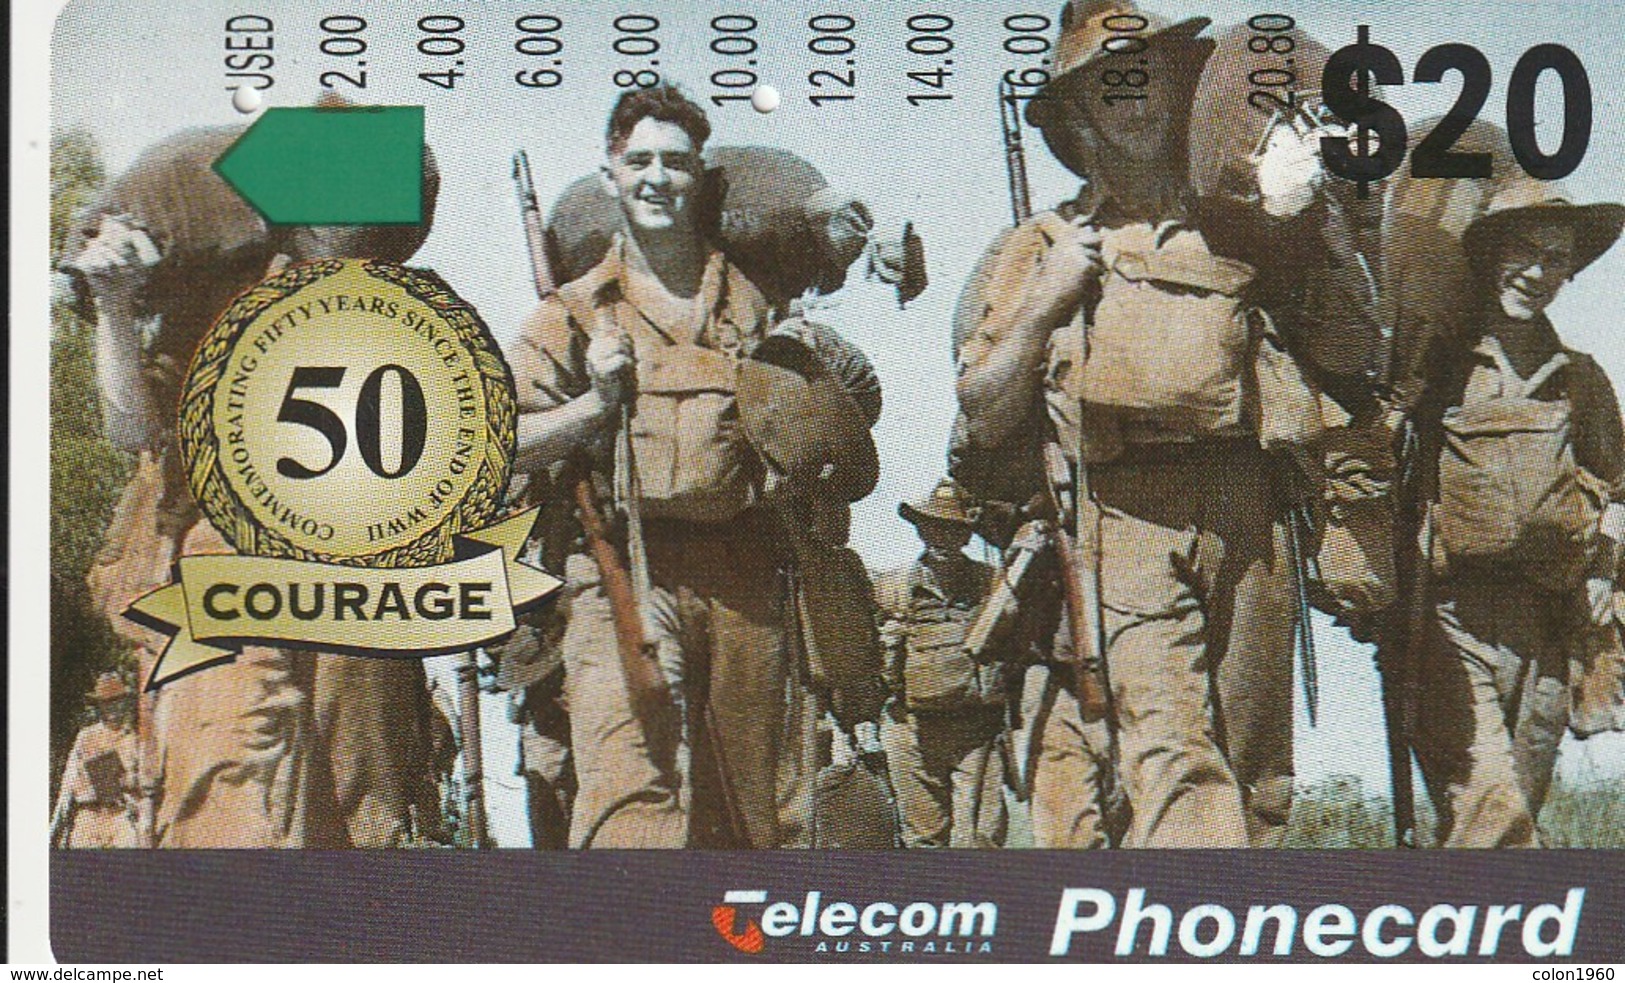 TARJETA TELEFONICA DE AUSTRALIA. AVIONES. 50 Years Since The End Of World War II/Courage. AUS-M-281. (089). - Army